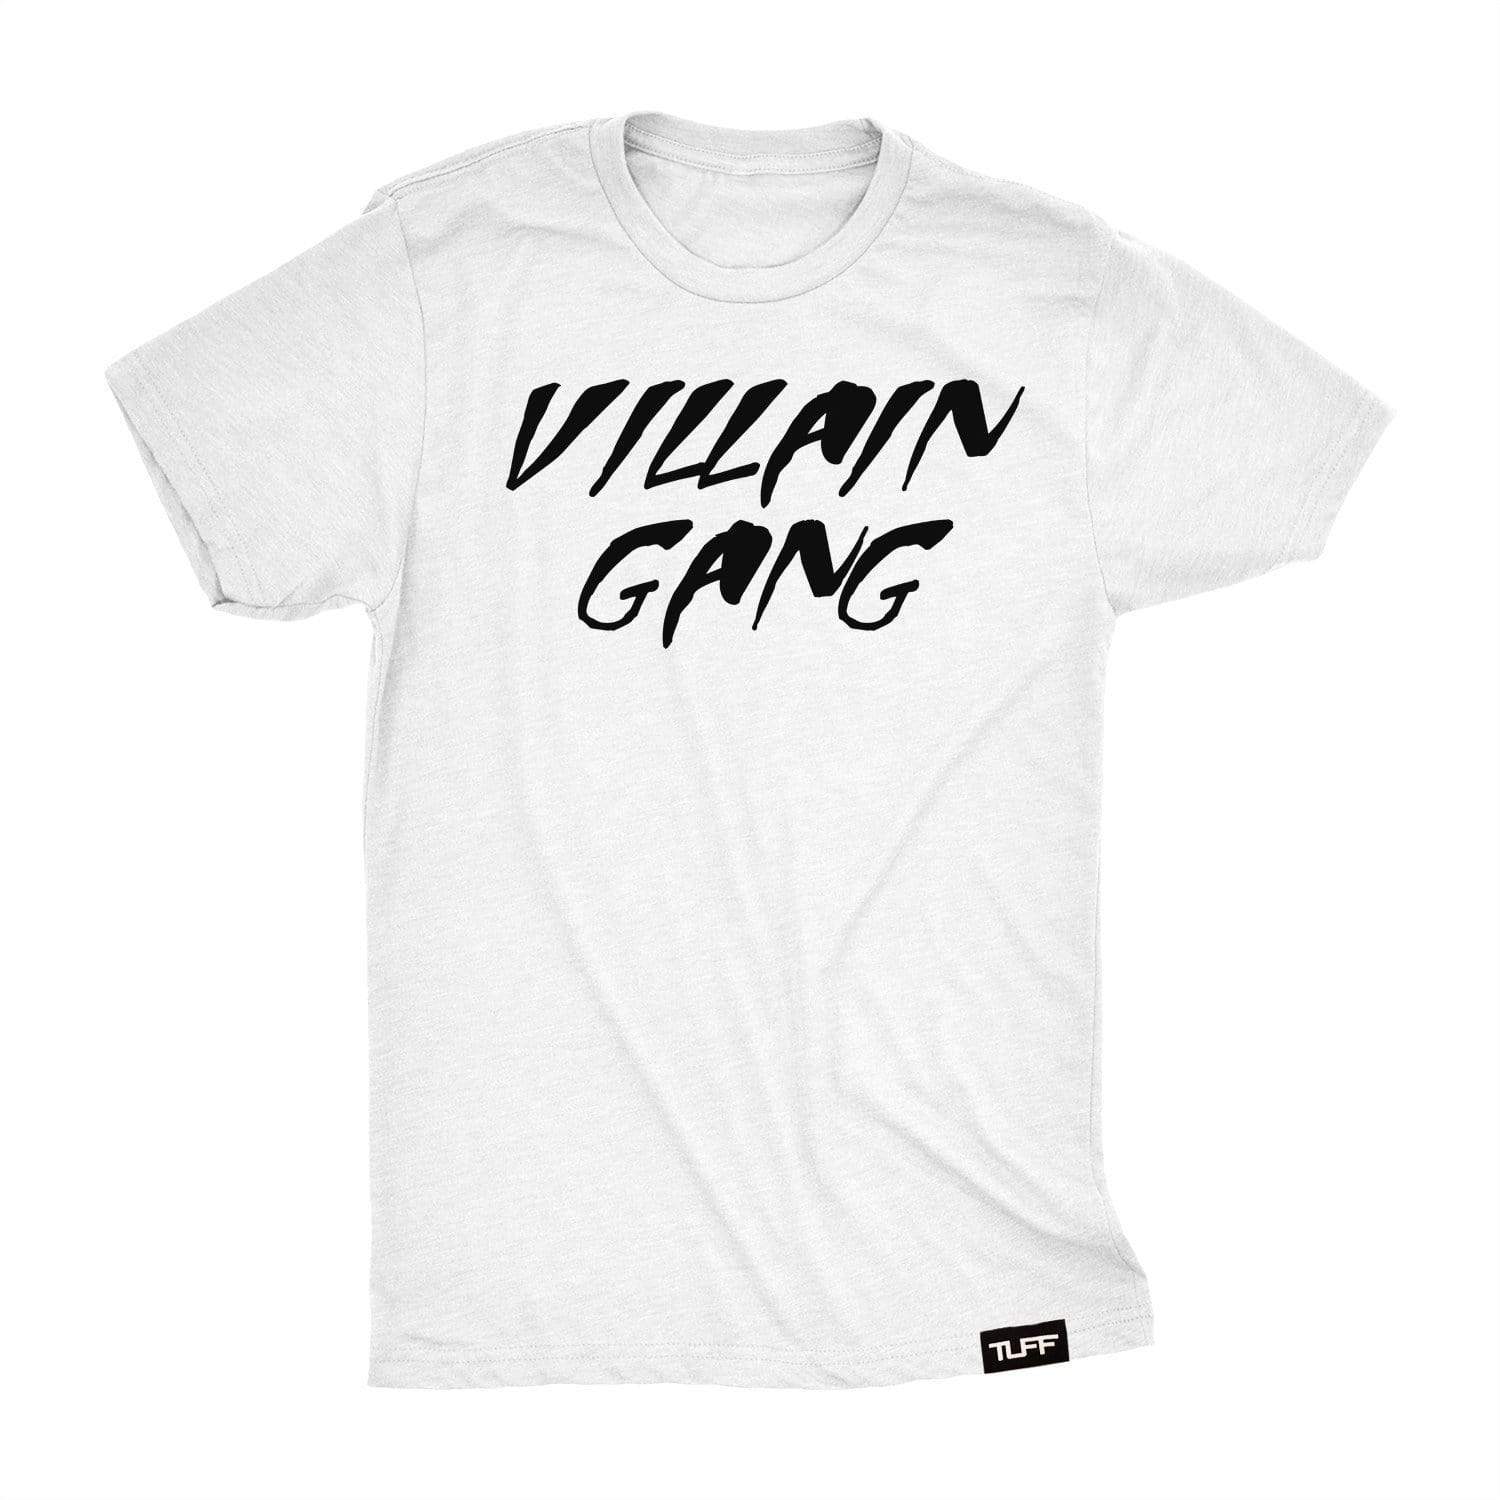 Villain Gang Tee S / White TuffWraps.com